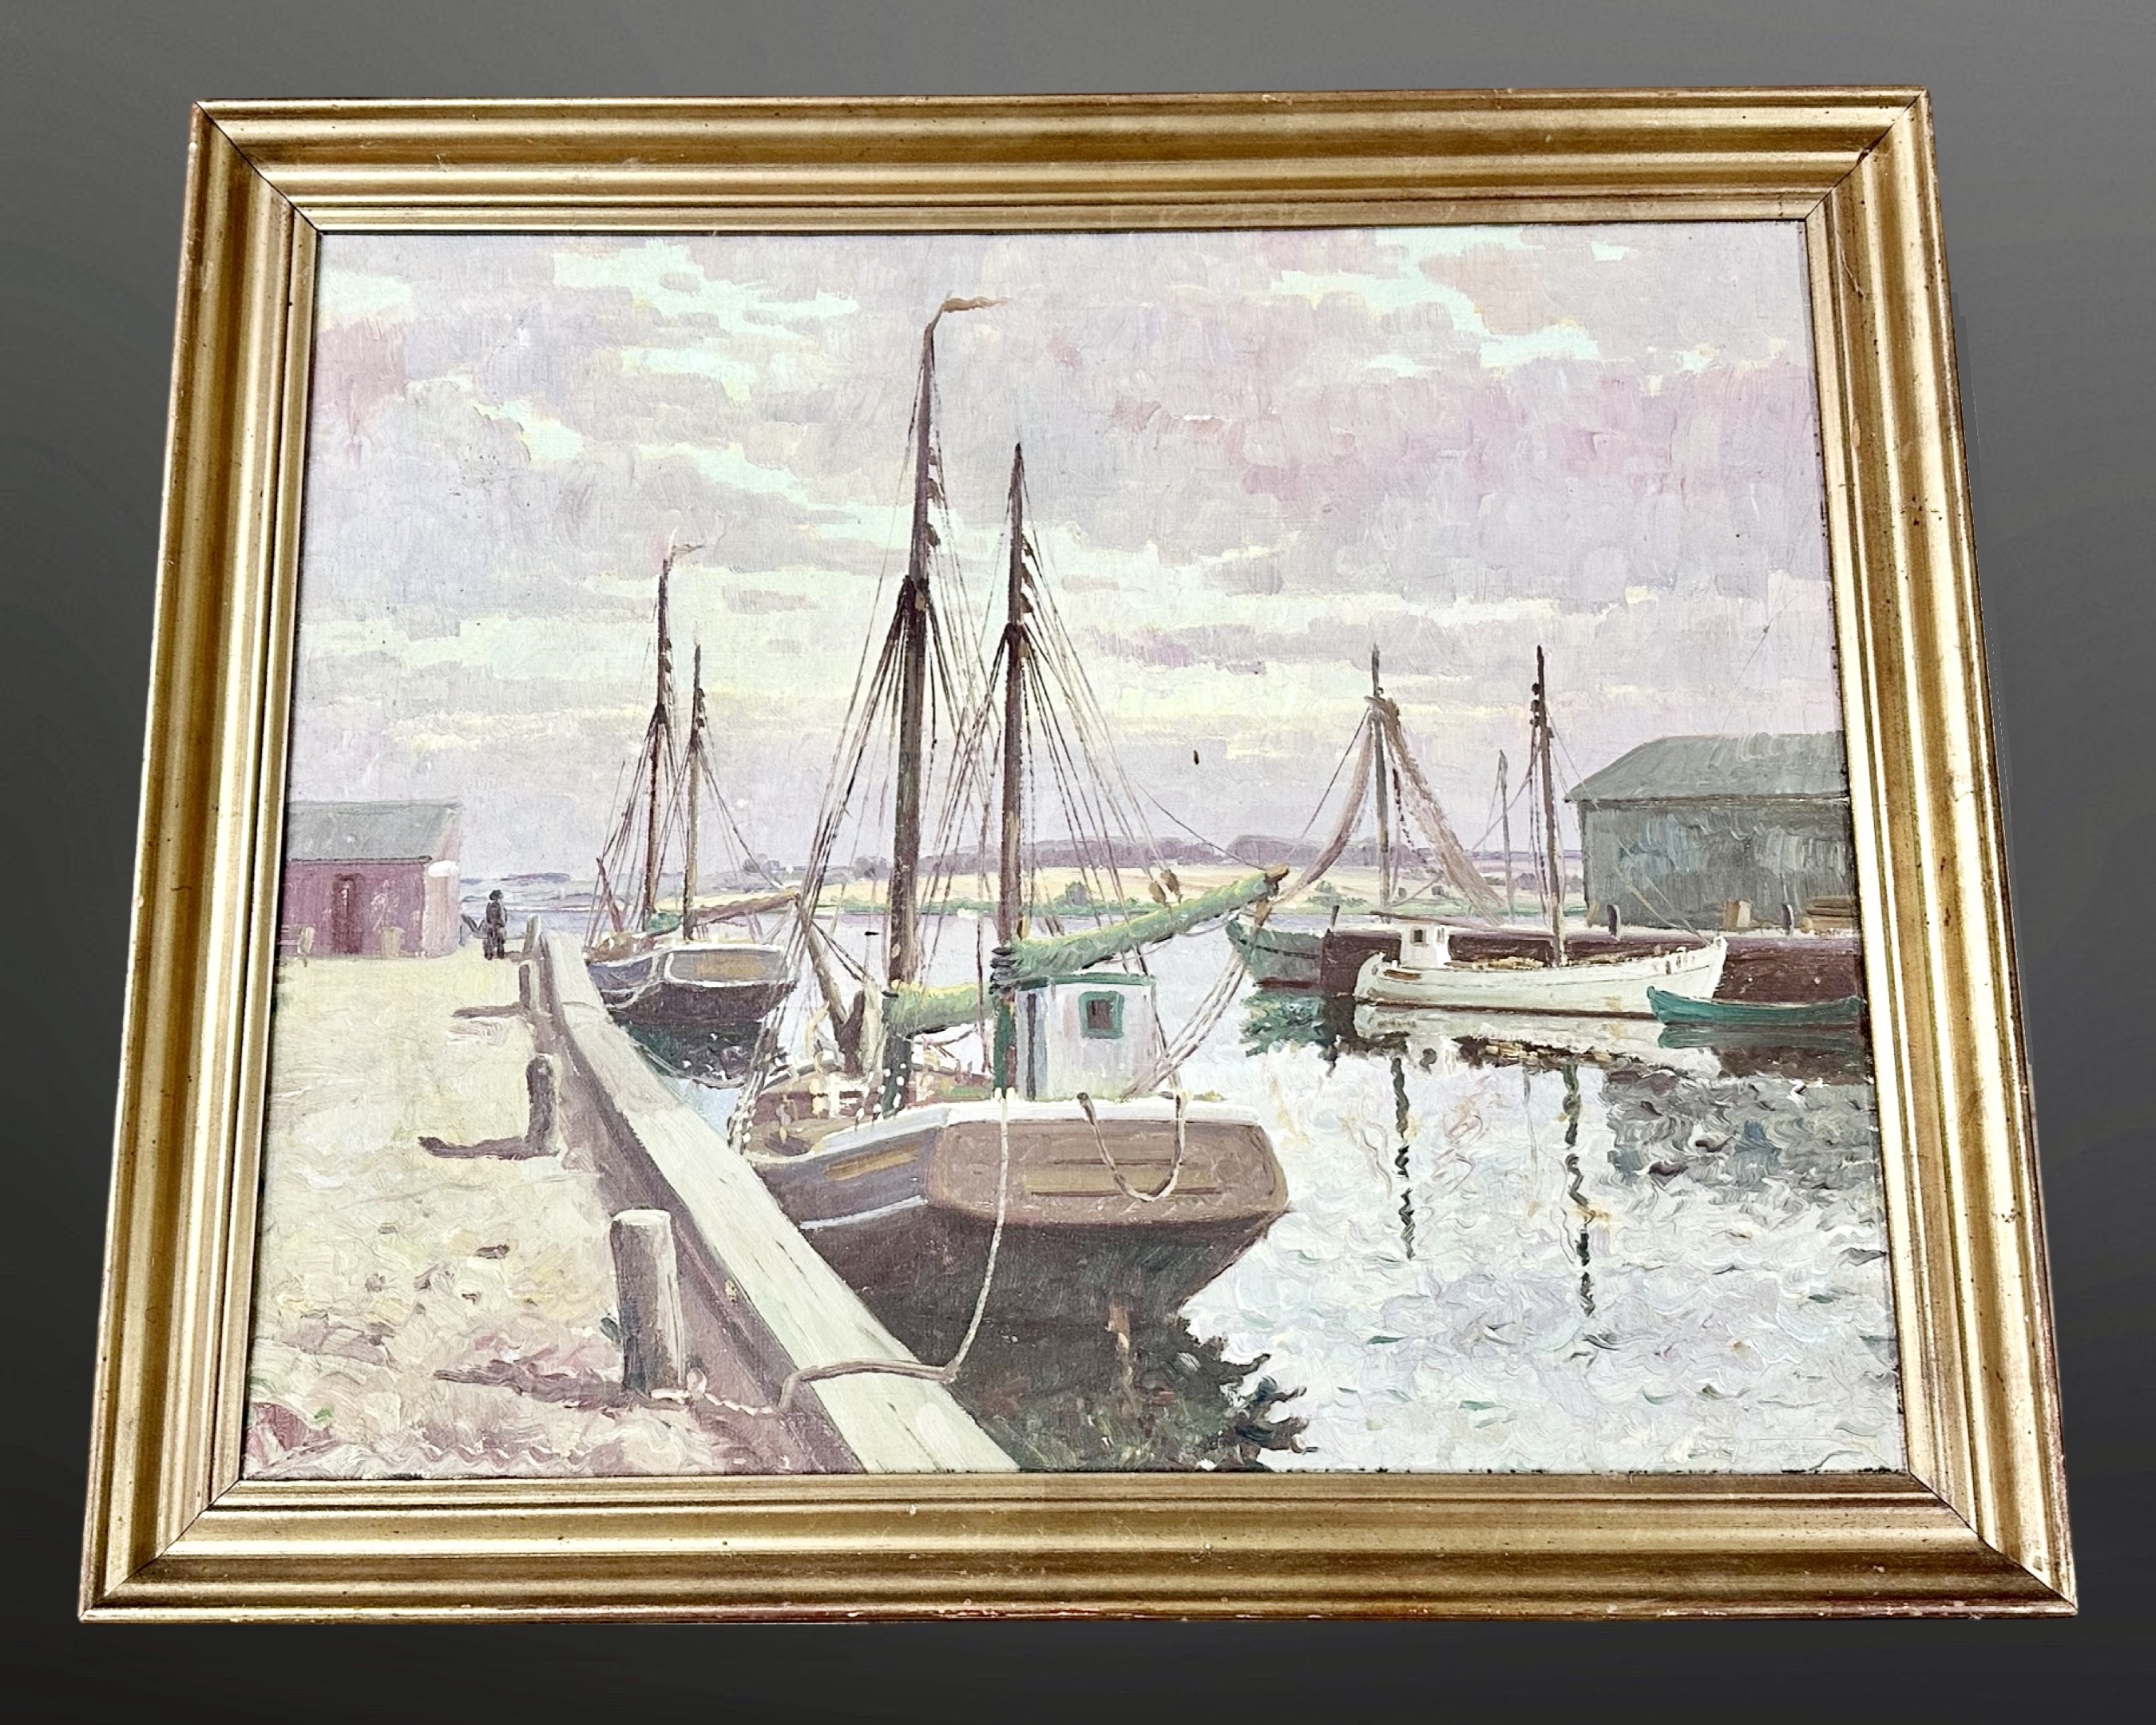 Twentieth century Continental School: Sailing boats in a dock, oil on canvas, 80 cm x 65 cm, framed.